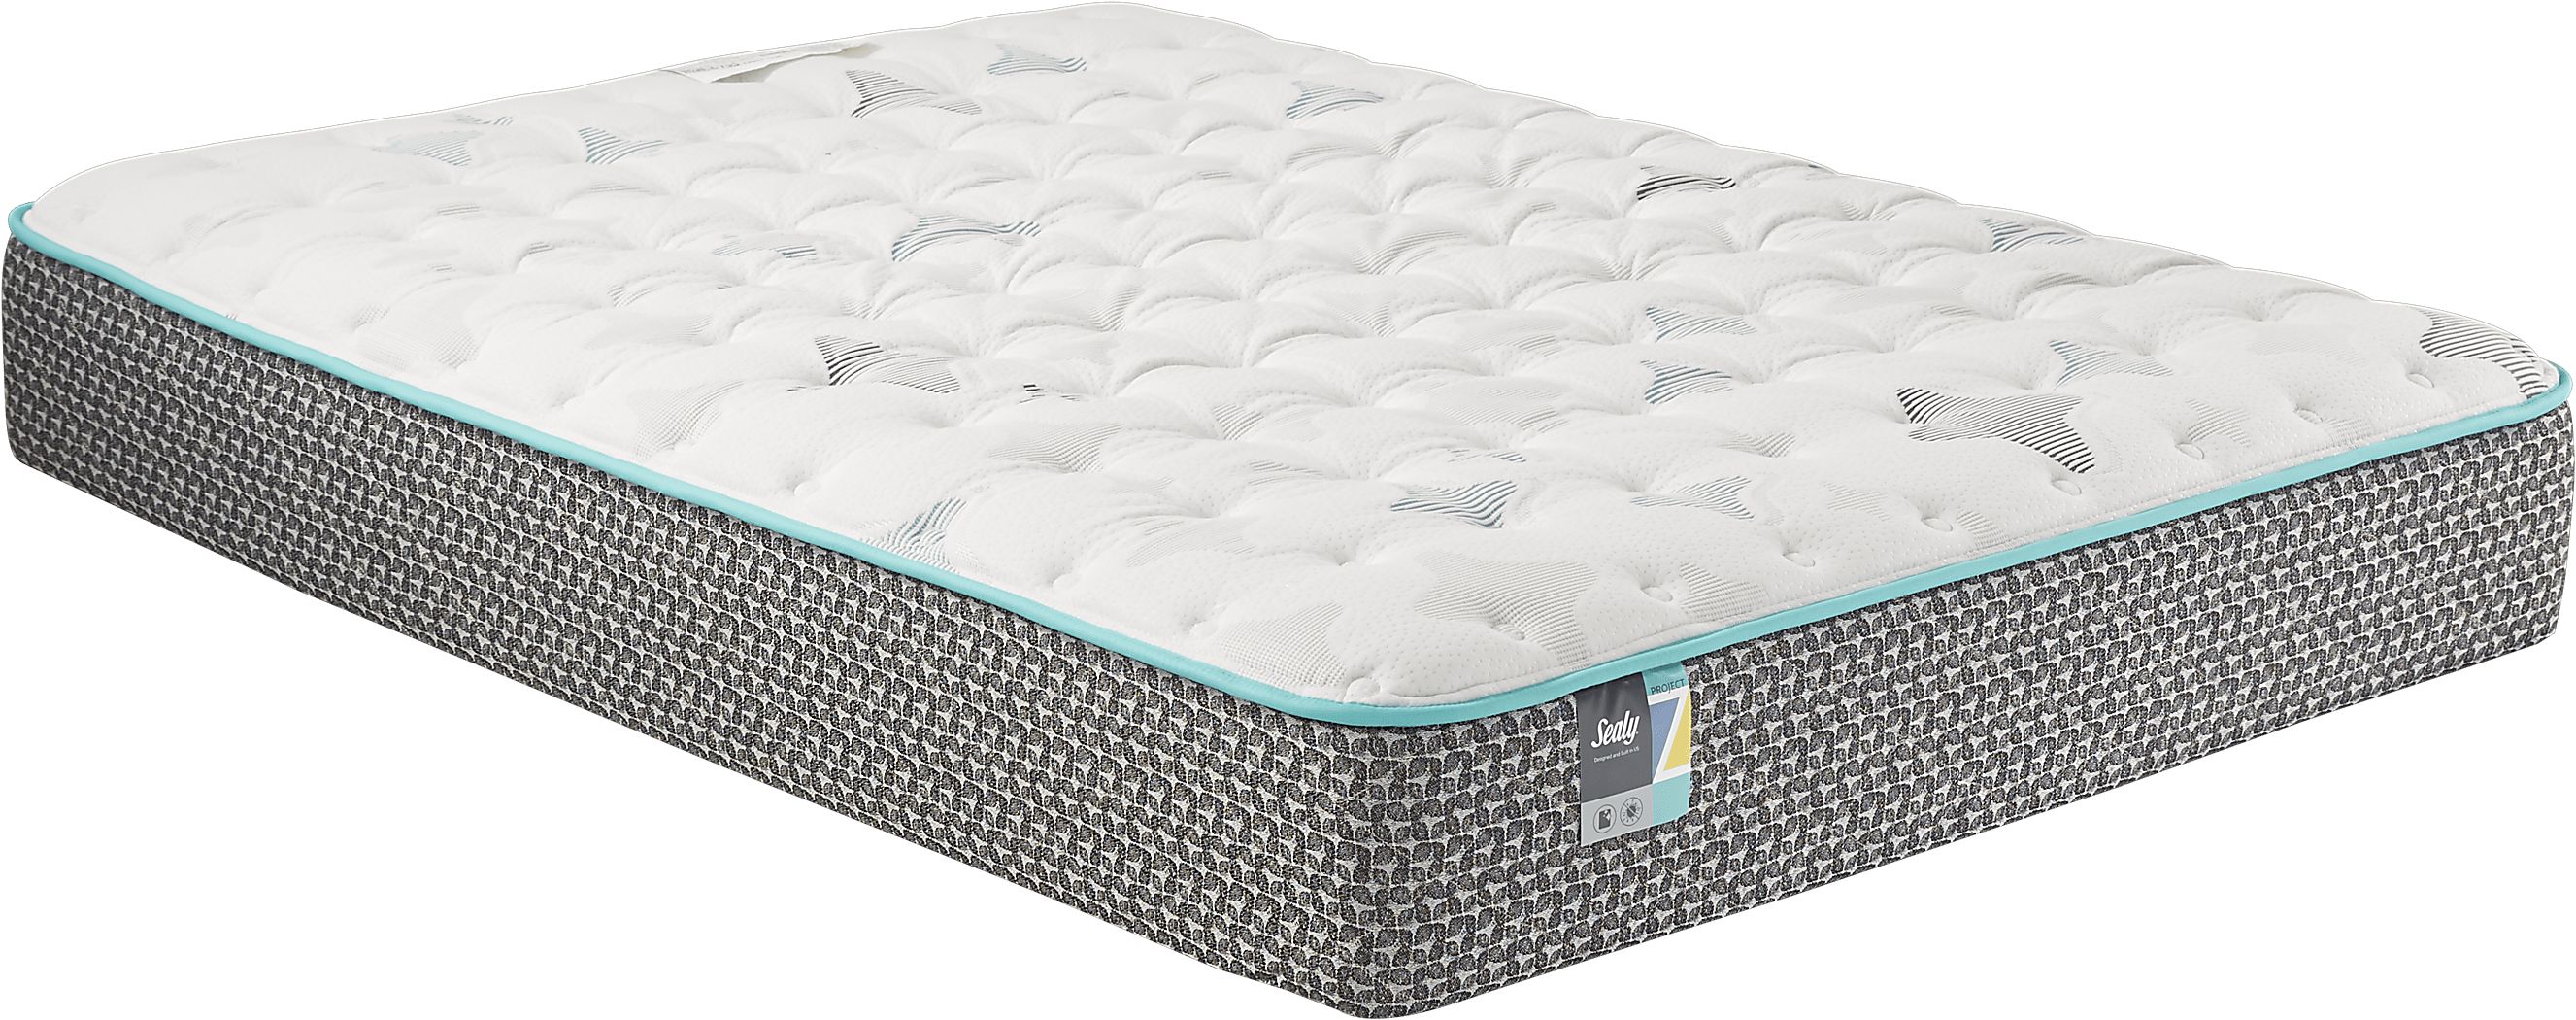 sealy z-301 full mattress reviews